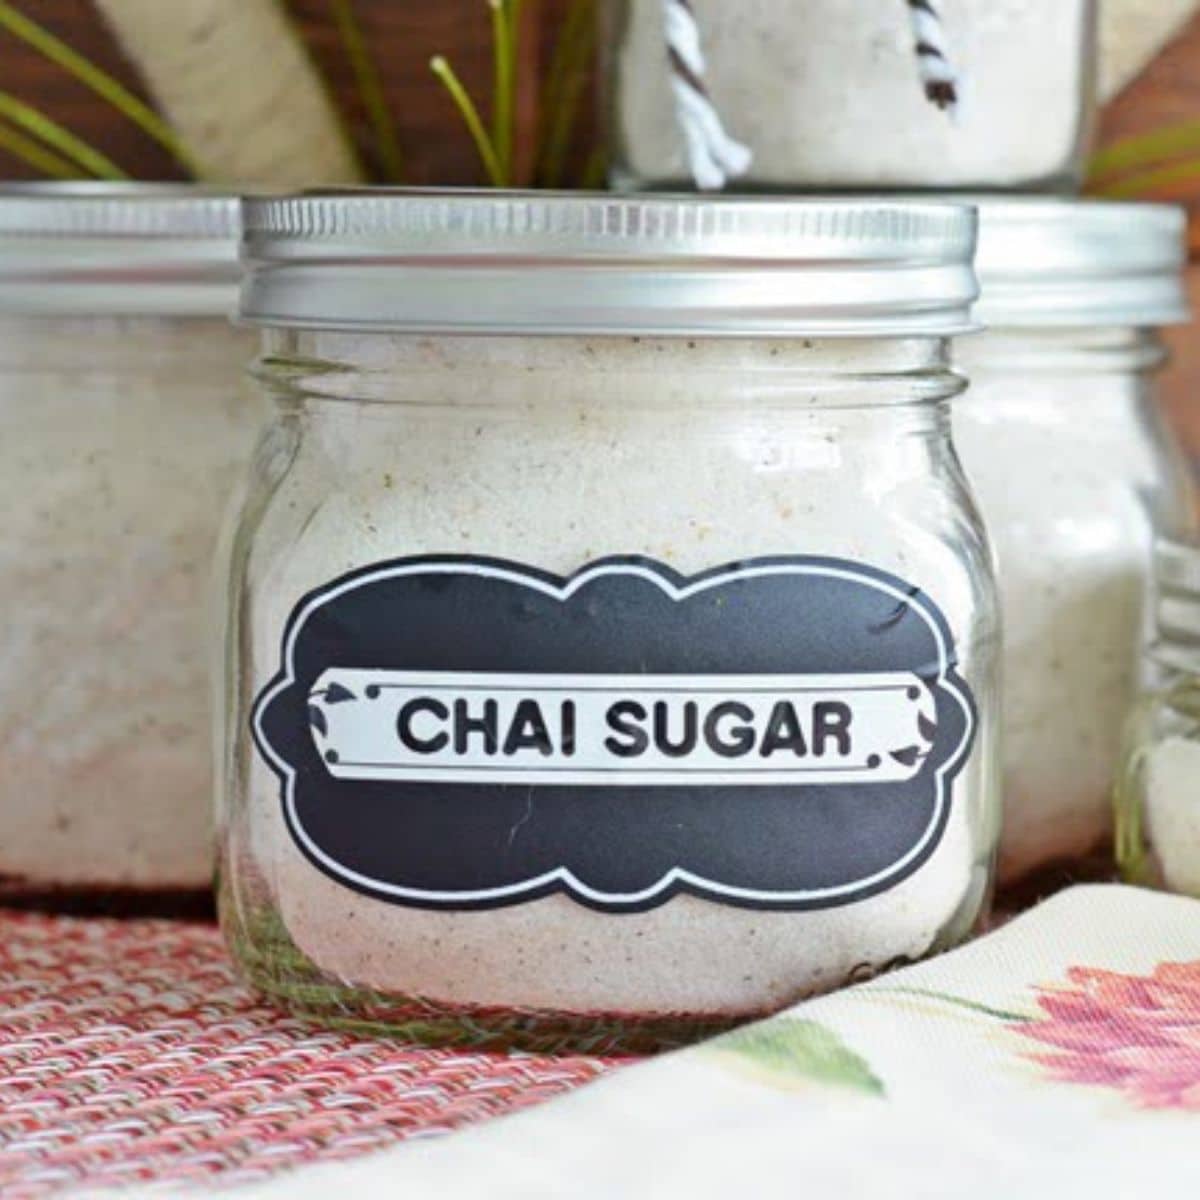 https://cottageatthecrossroads.com/wp-content/uploads/2015/08/Chai-Sugar-recipe.jpg